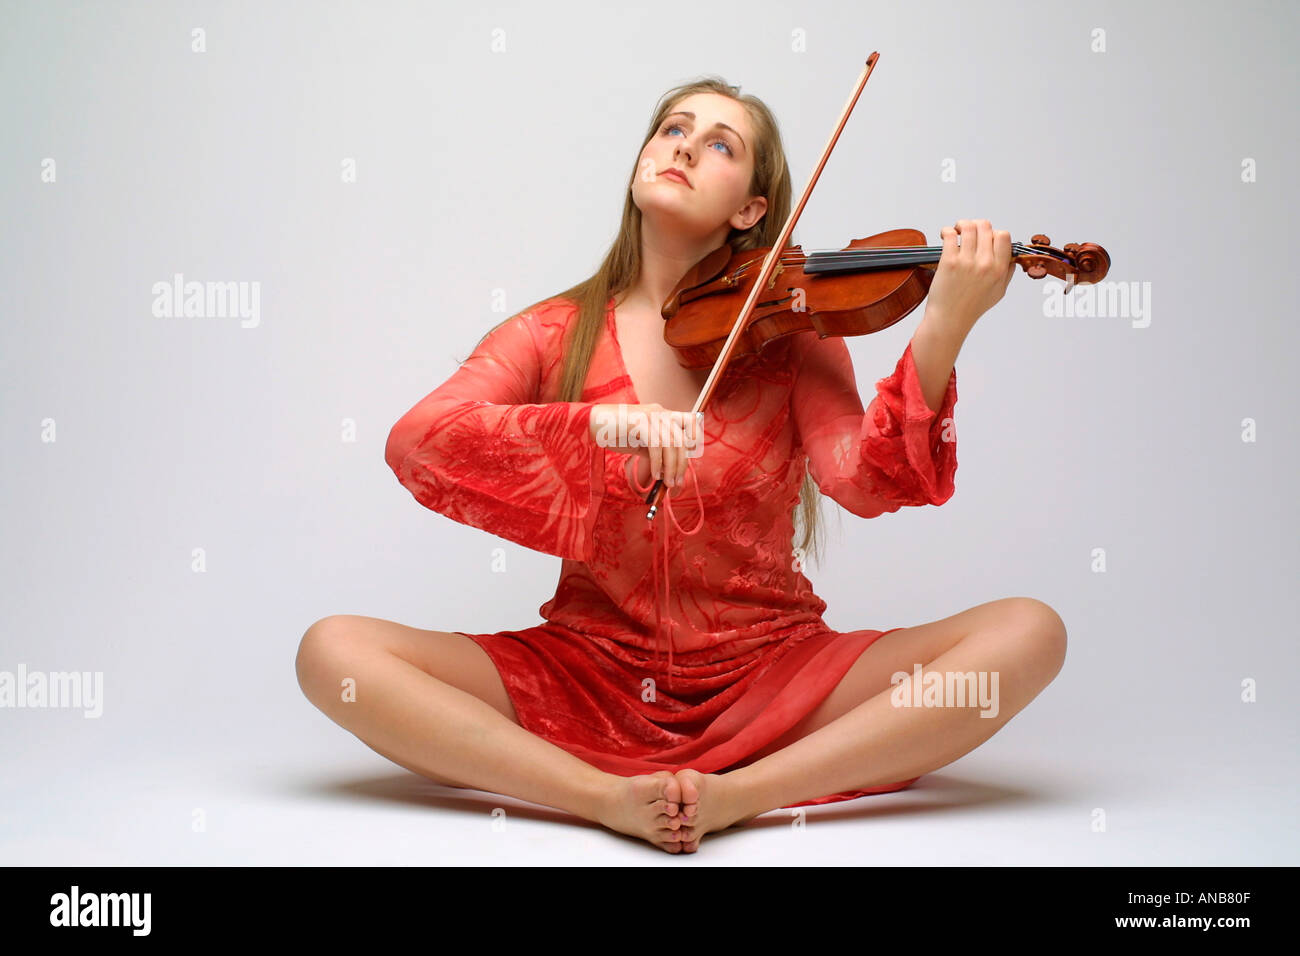 Woman violinist portrait Stock Photo